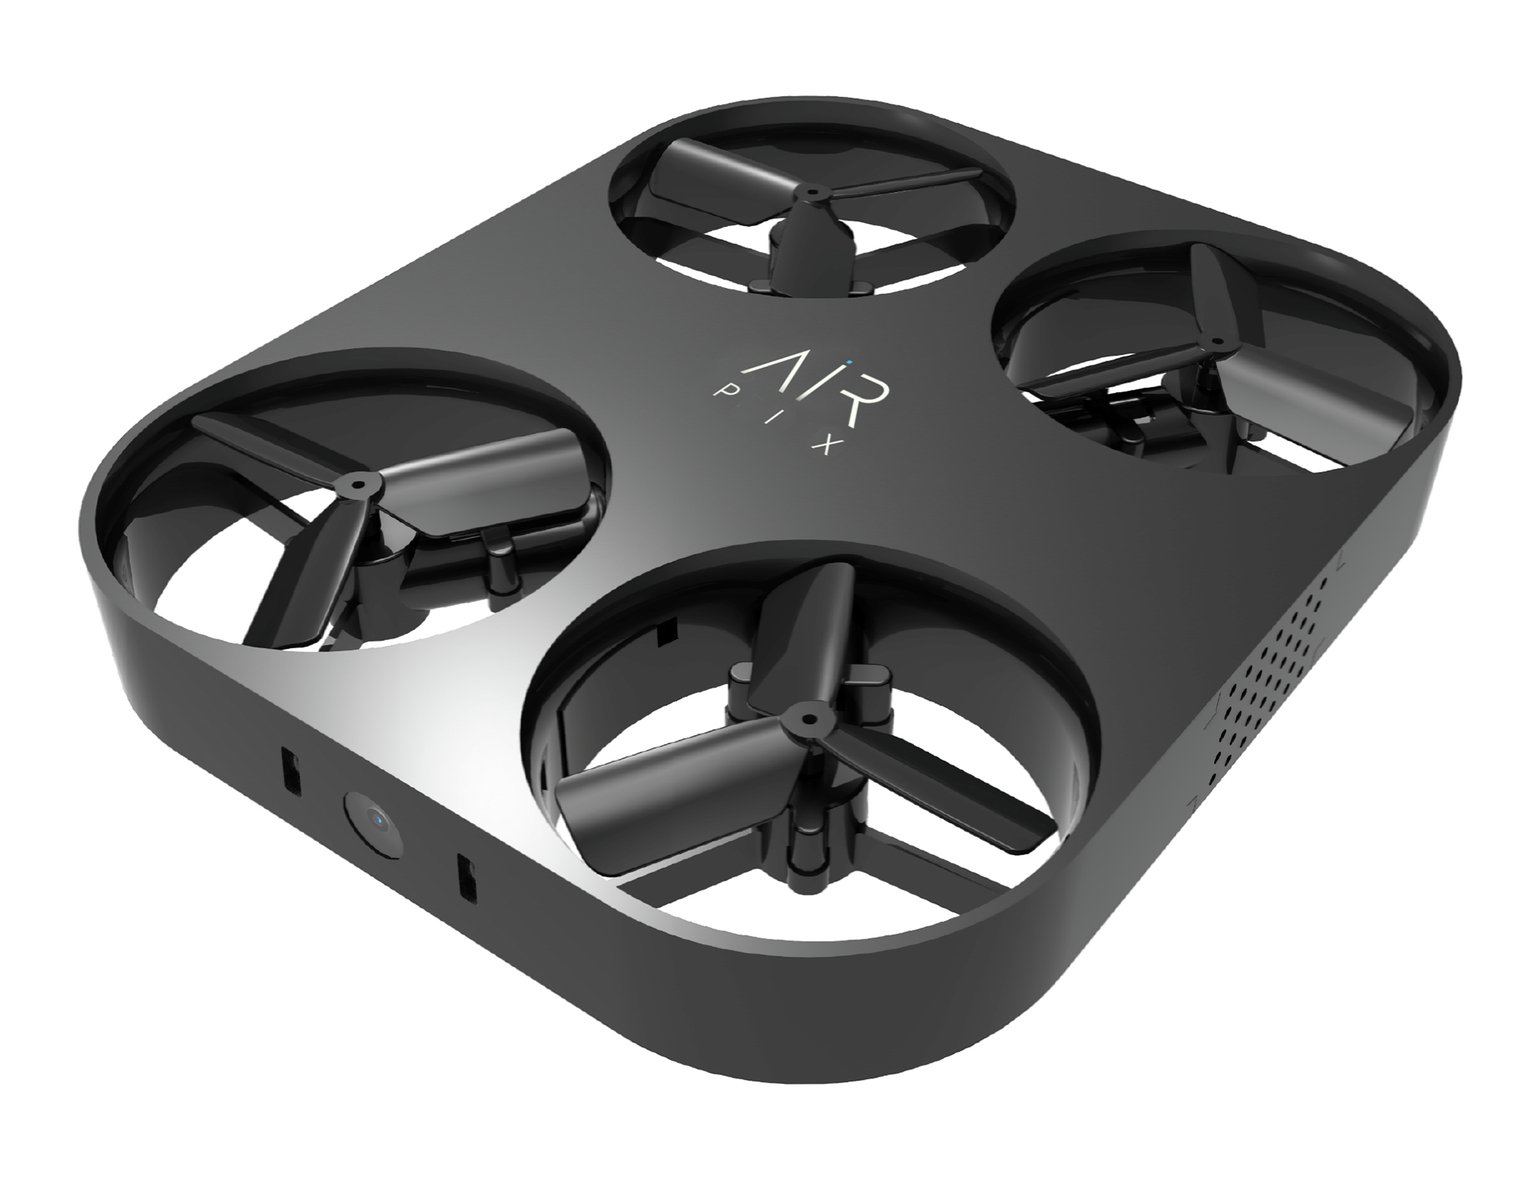 AirSelfie AirPix Drone Bundle Review